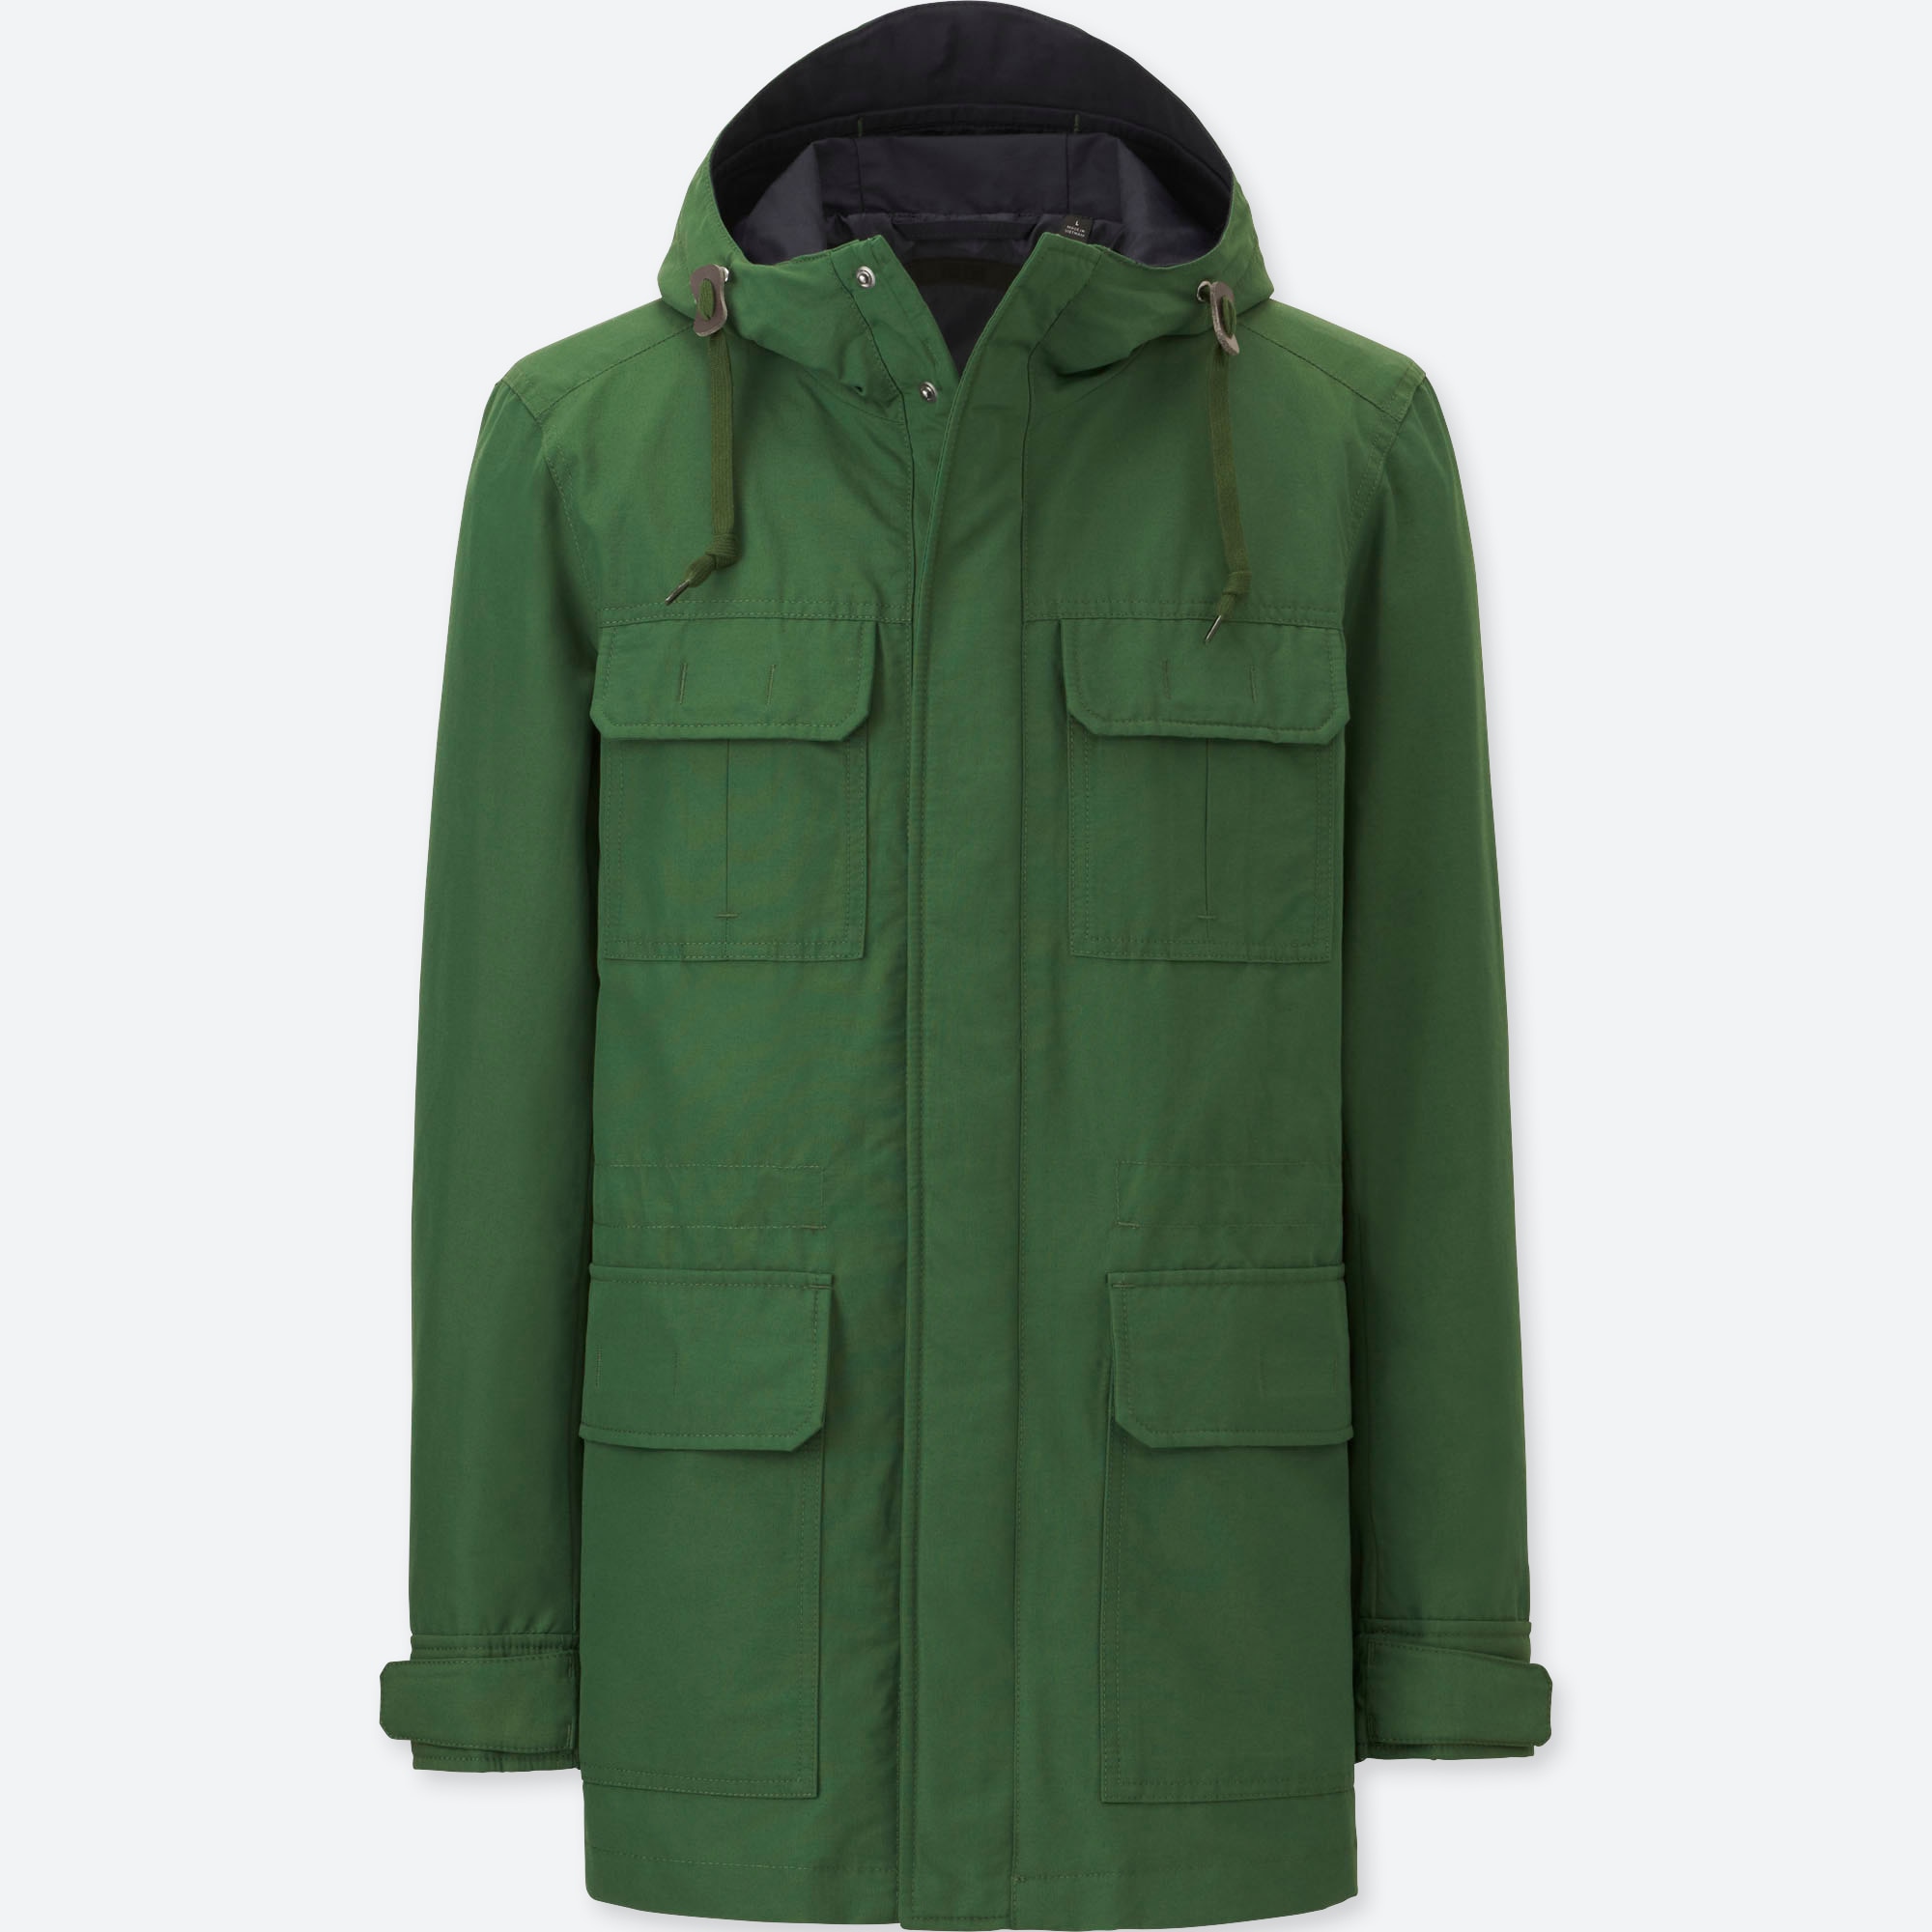 Uniqlo Field Jacket Style Men039s Size Medium Collared Worn  eBay